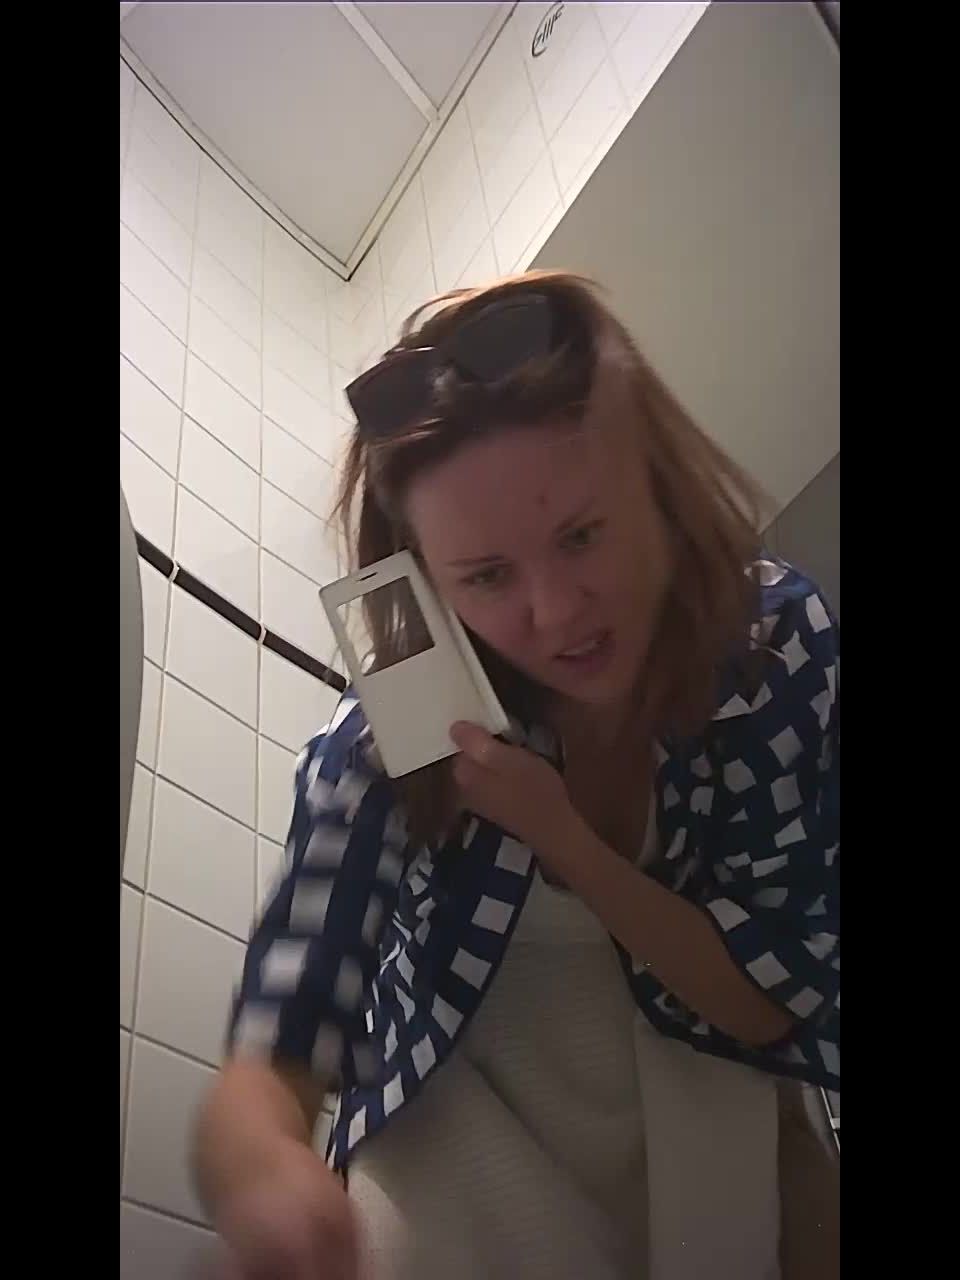 Voyeur in Public Toilet – Student restroom 98 - voyeur in public toilet - voyeur 